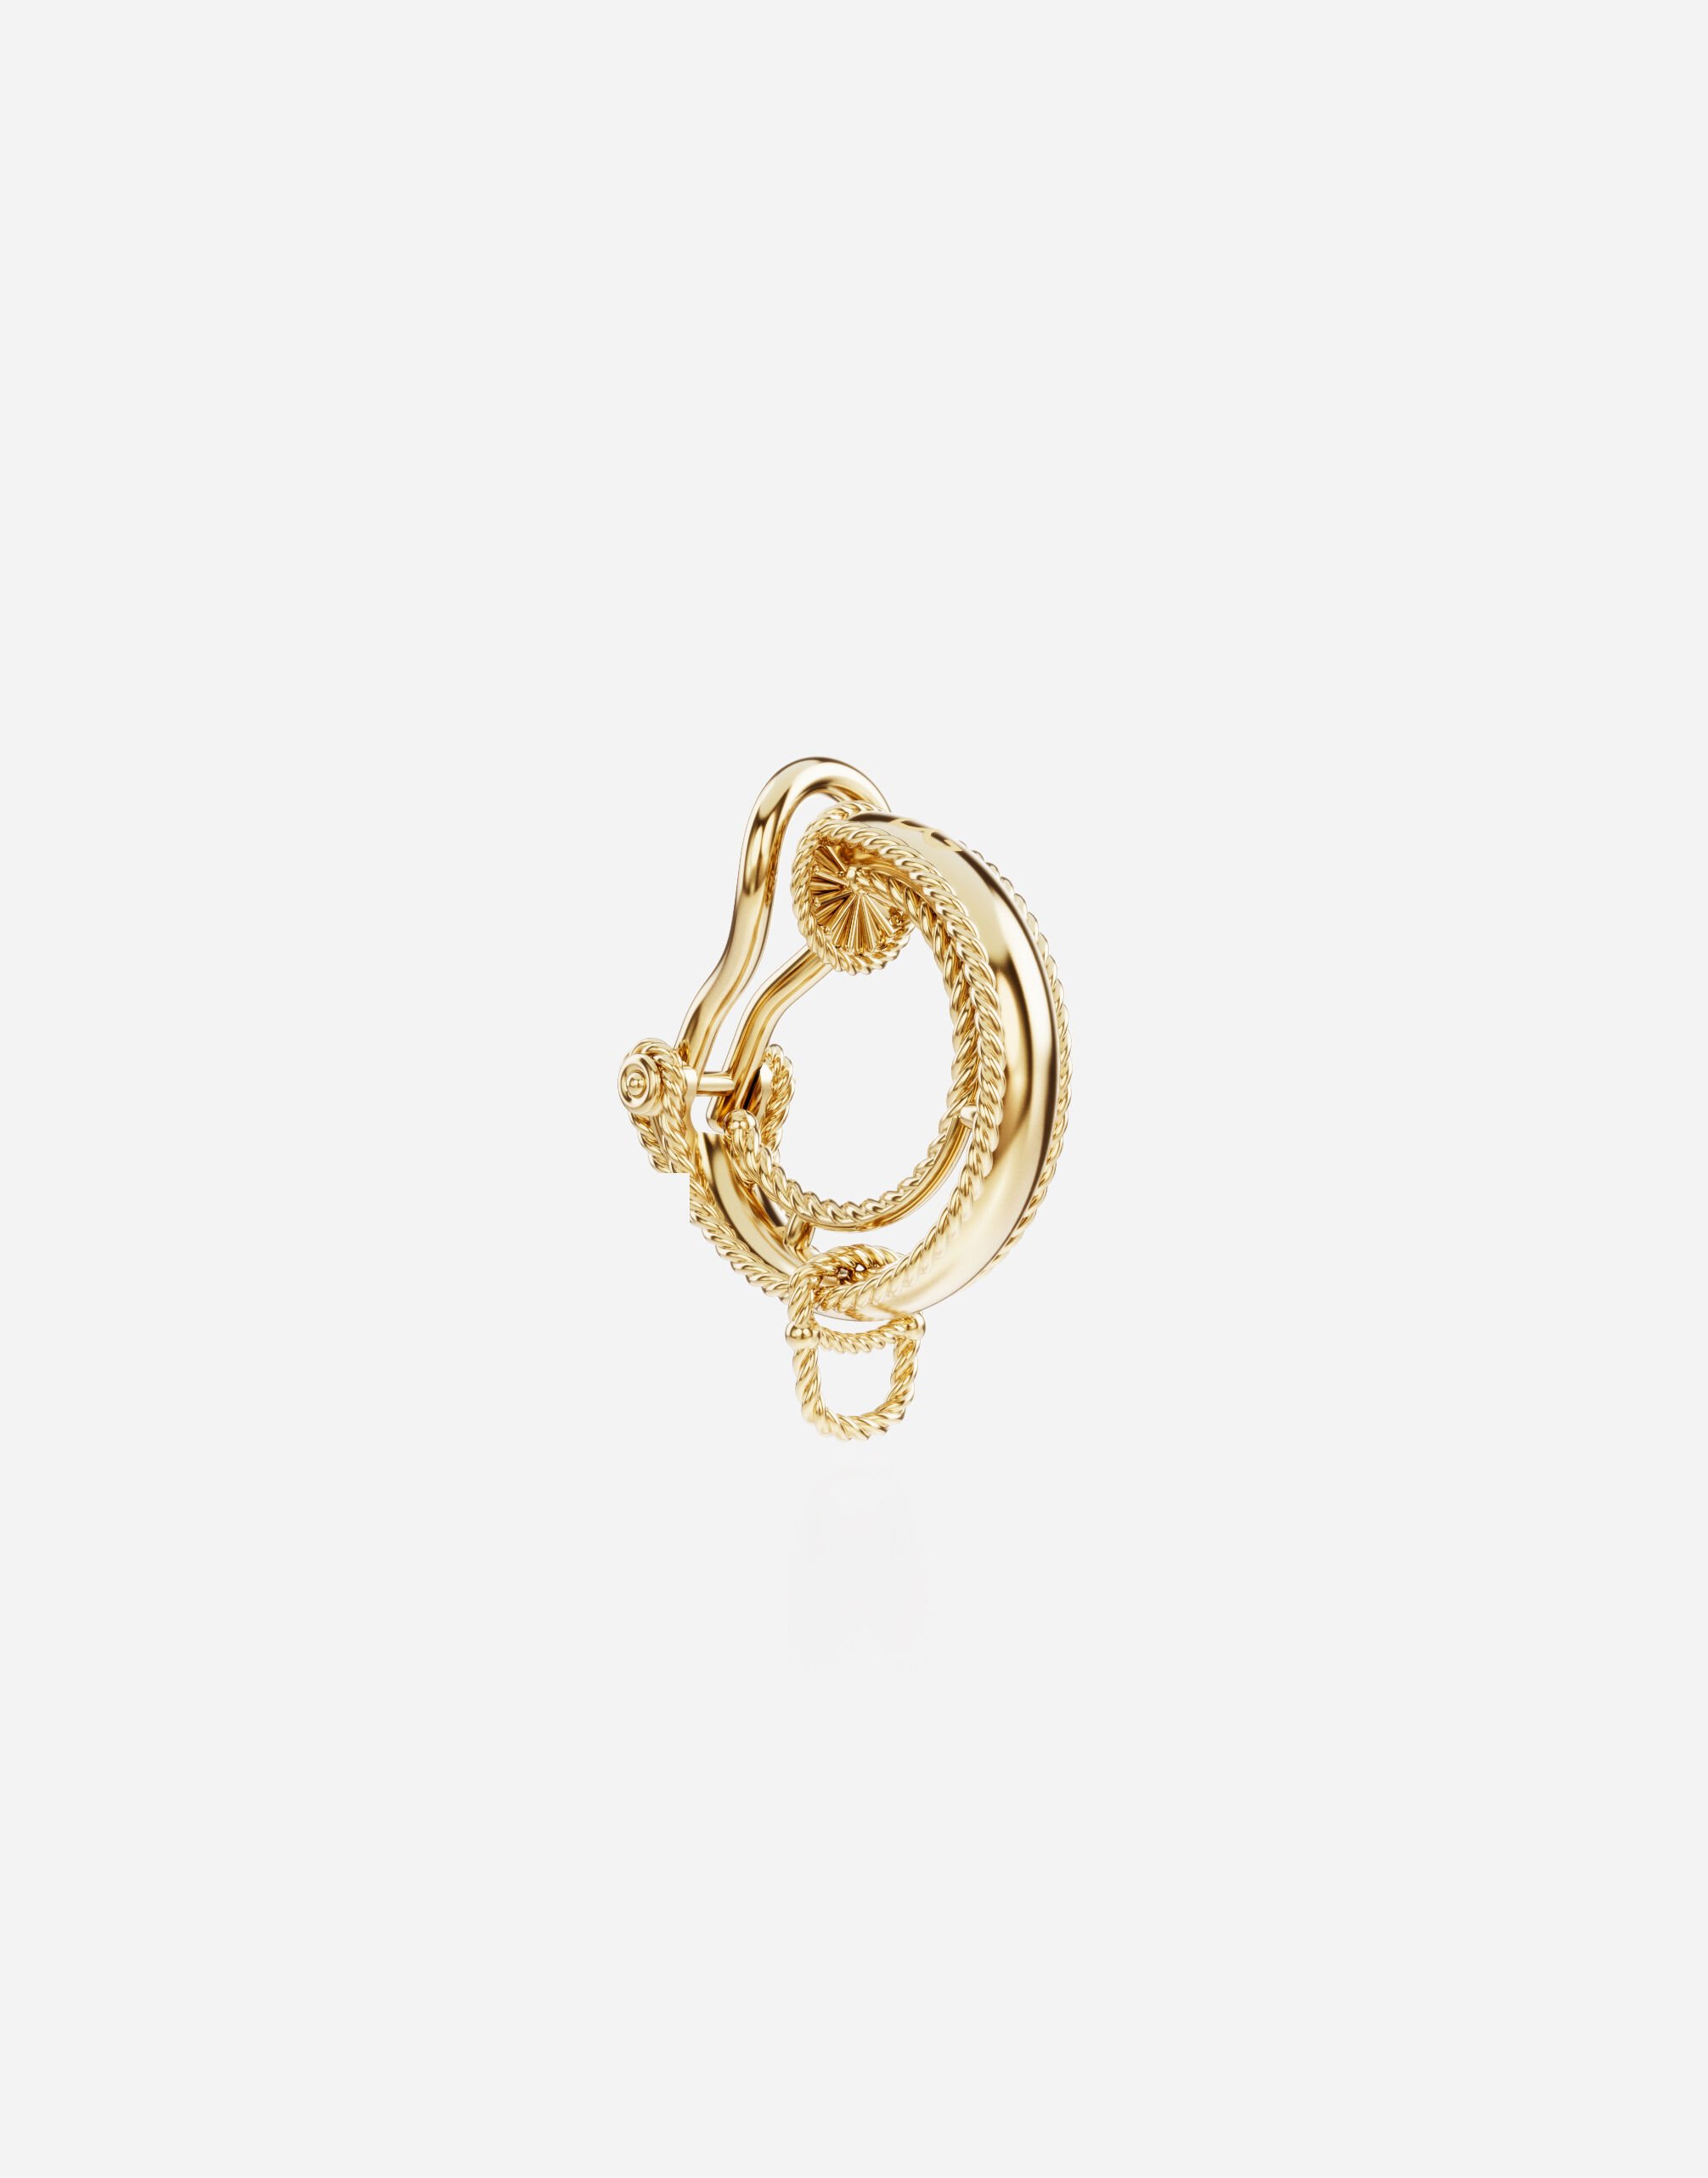 Dolce & Gabbana Rainbow Alphabet clip-on earring in yellow 18kt gold Yellow gold WAPR1GWMIX6